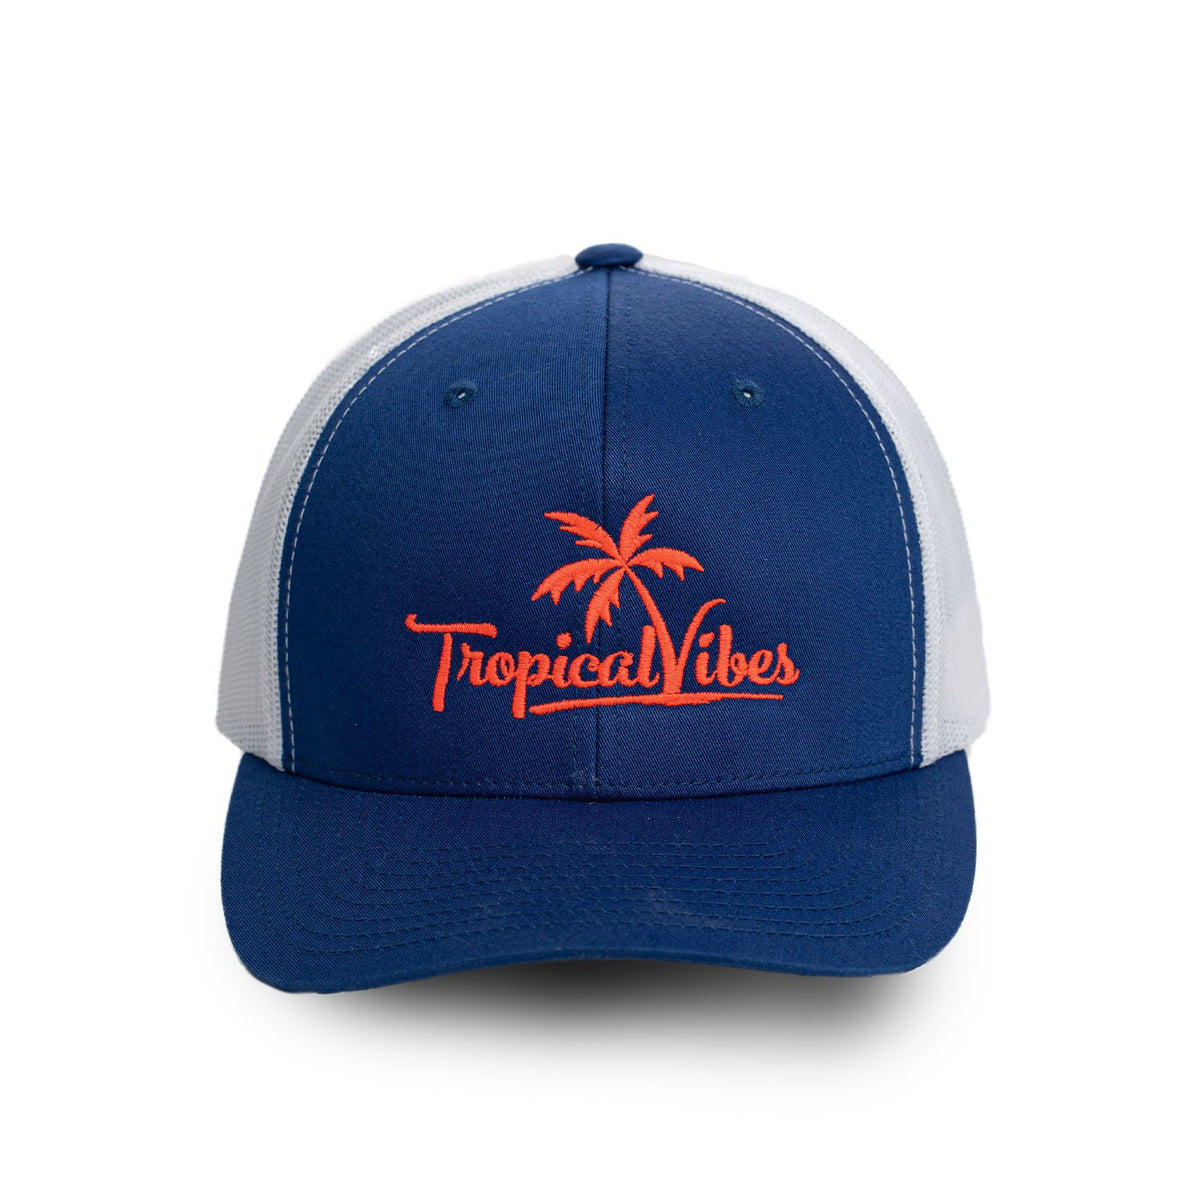 Tommy Bahama Hat Blue Palm Tree Sunset Mountain Adjustable SnapBack Trucker  Cap 